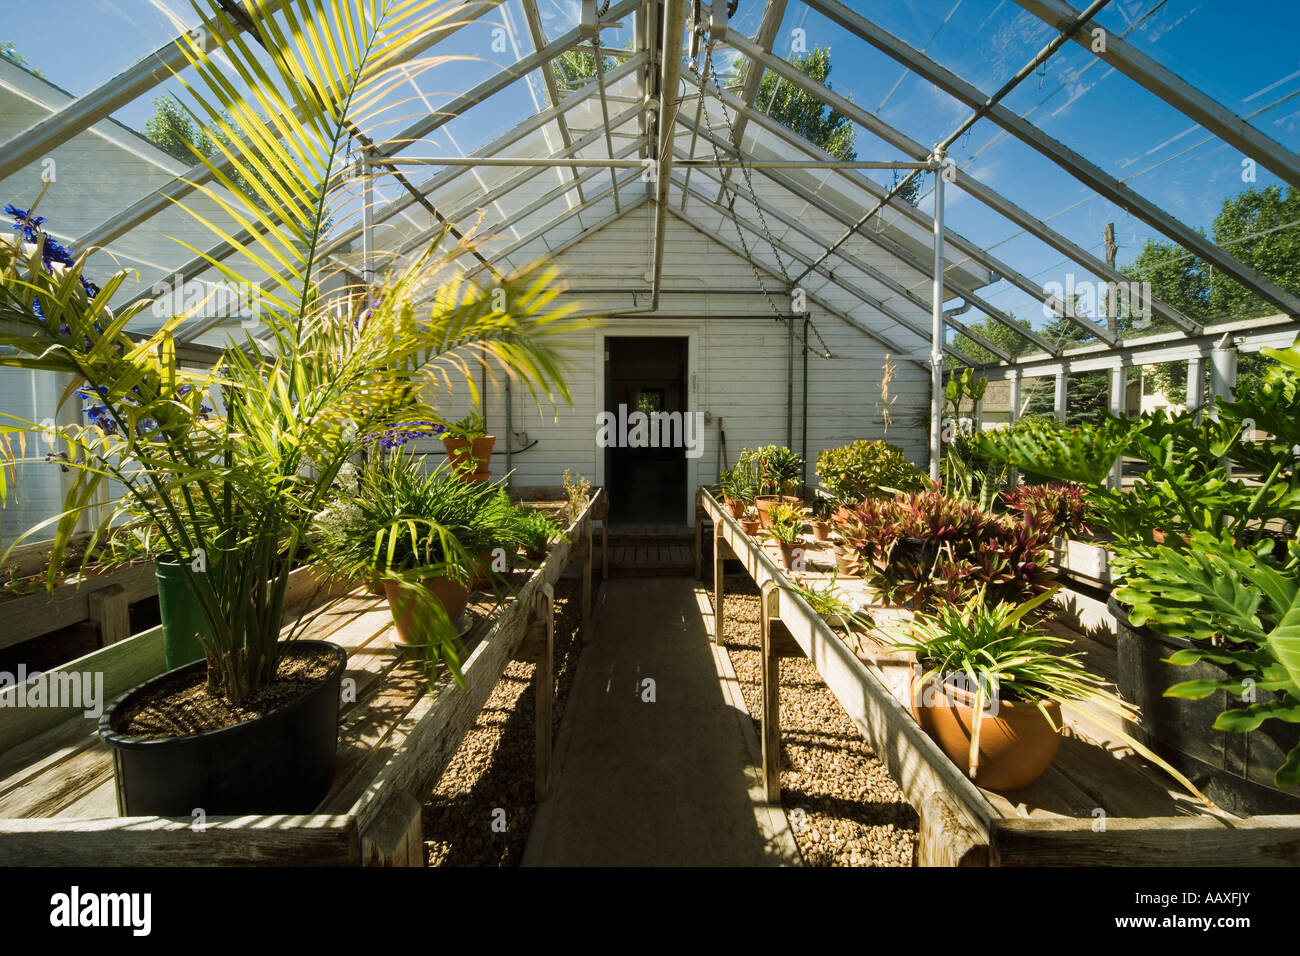 Inside a greenhouse Stock Photo